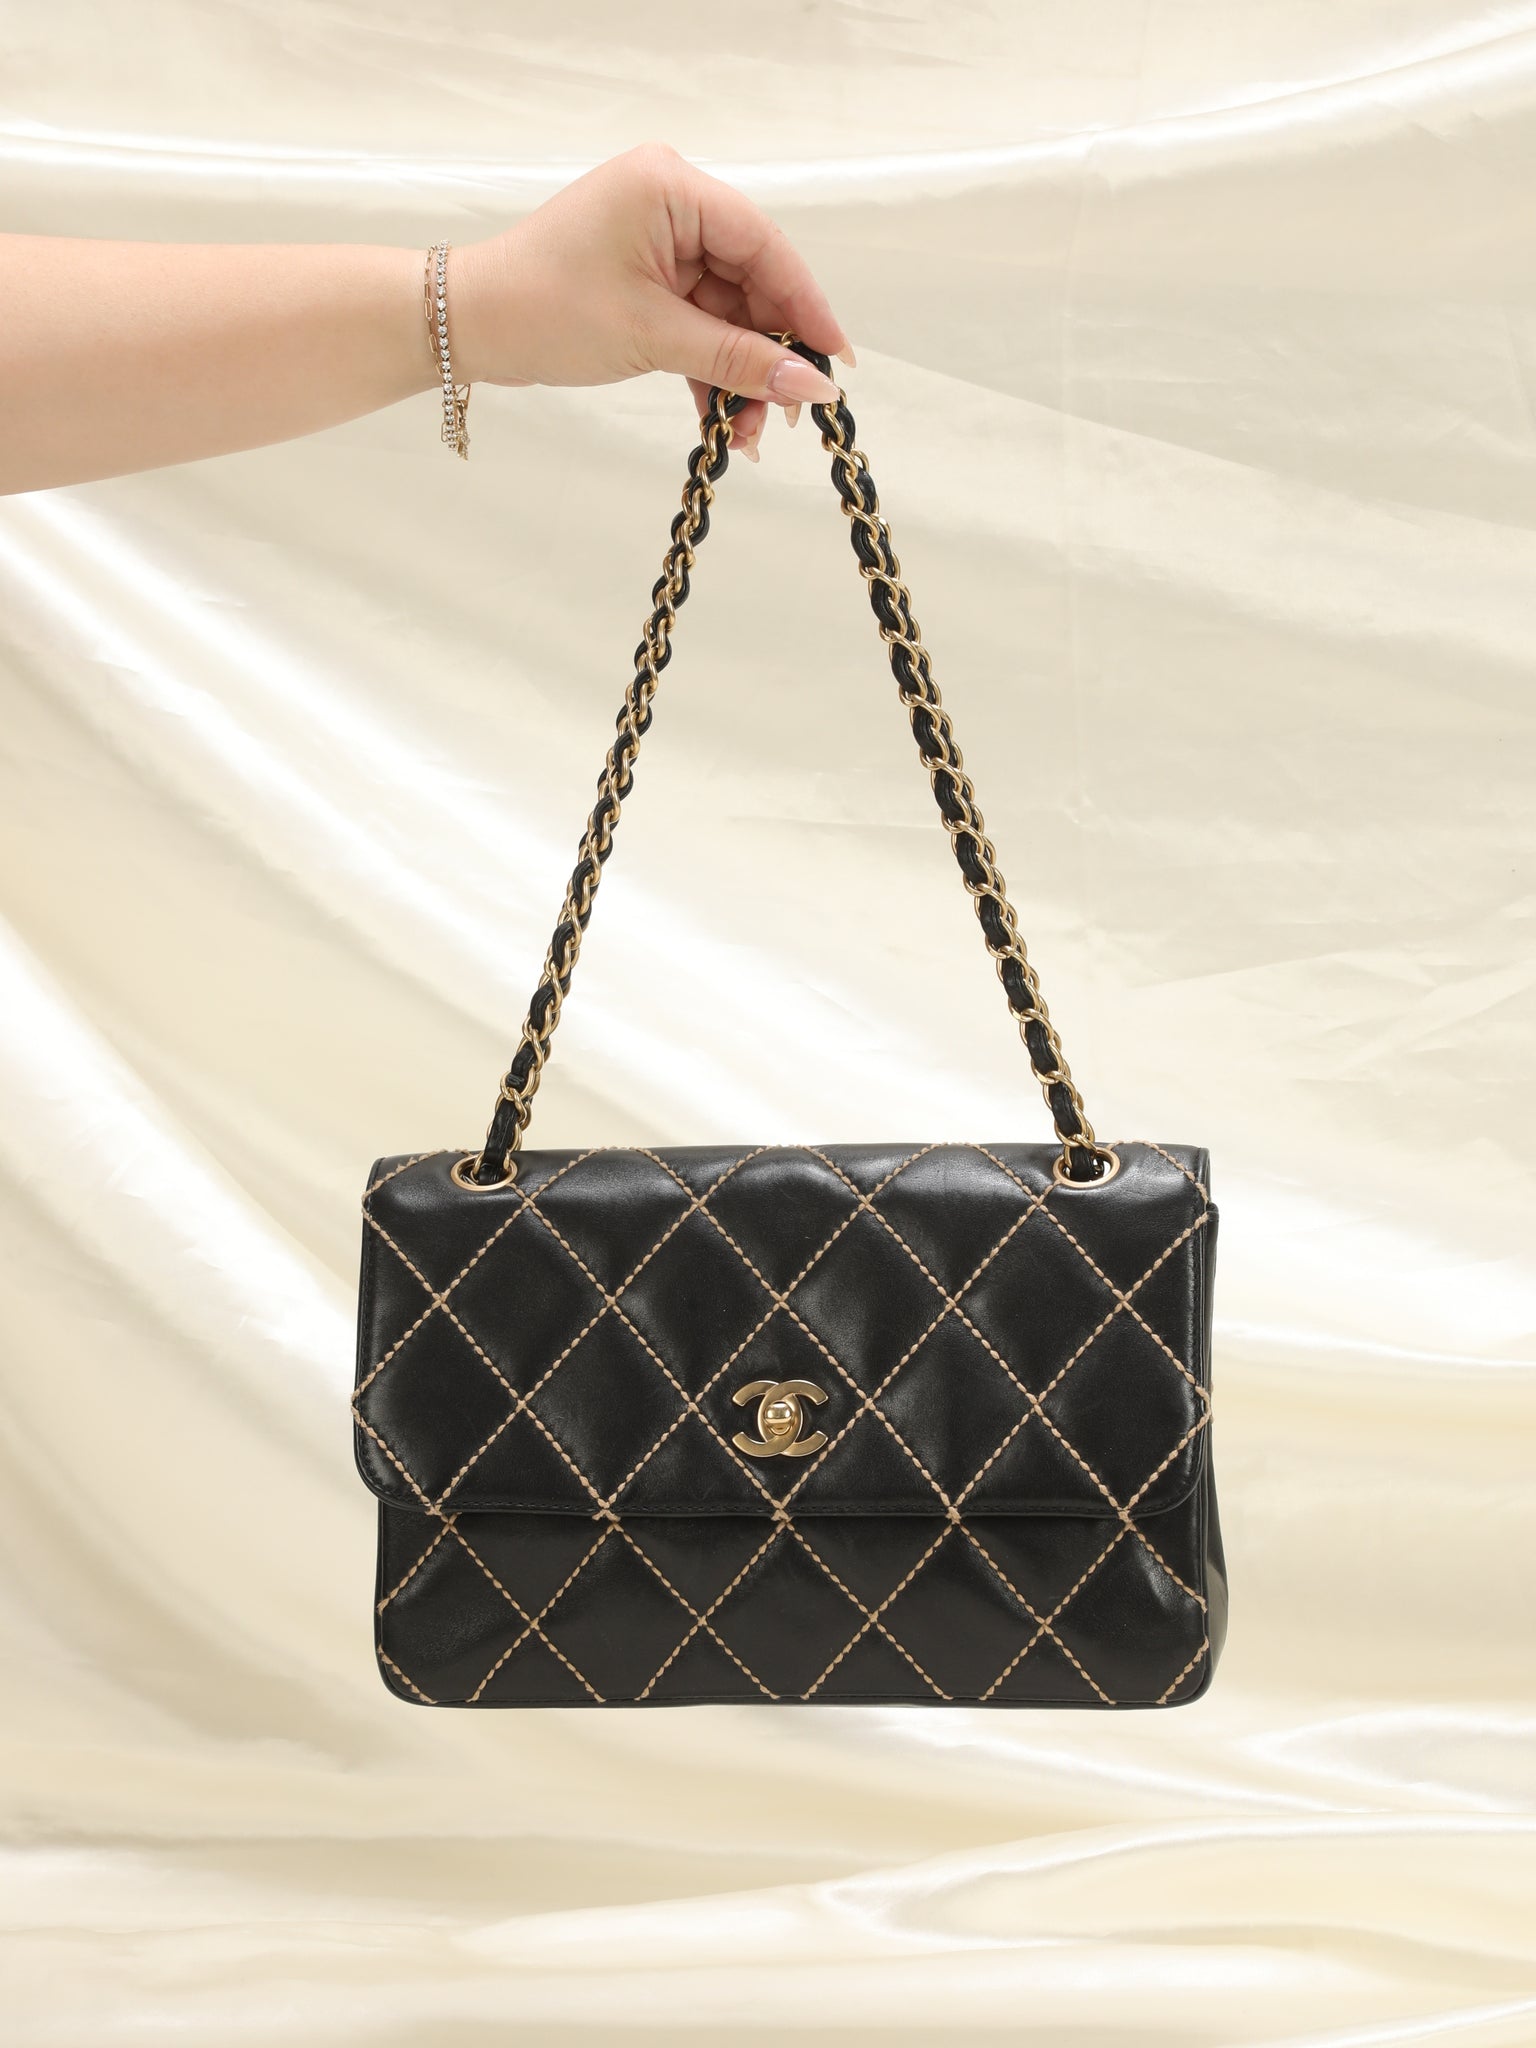 Chanel Contrast Stitch Shoulder Bag in Black | MTYCI